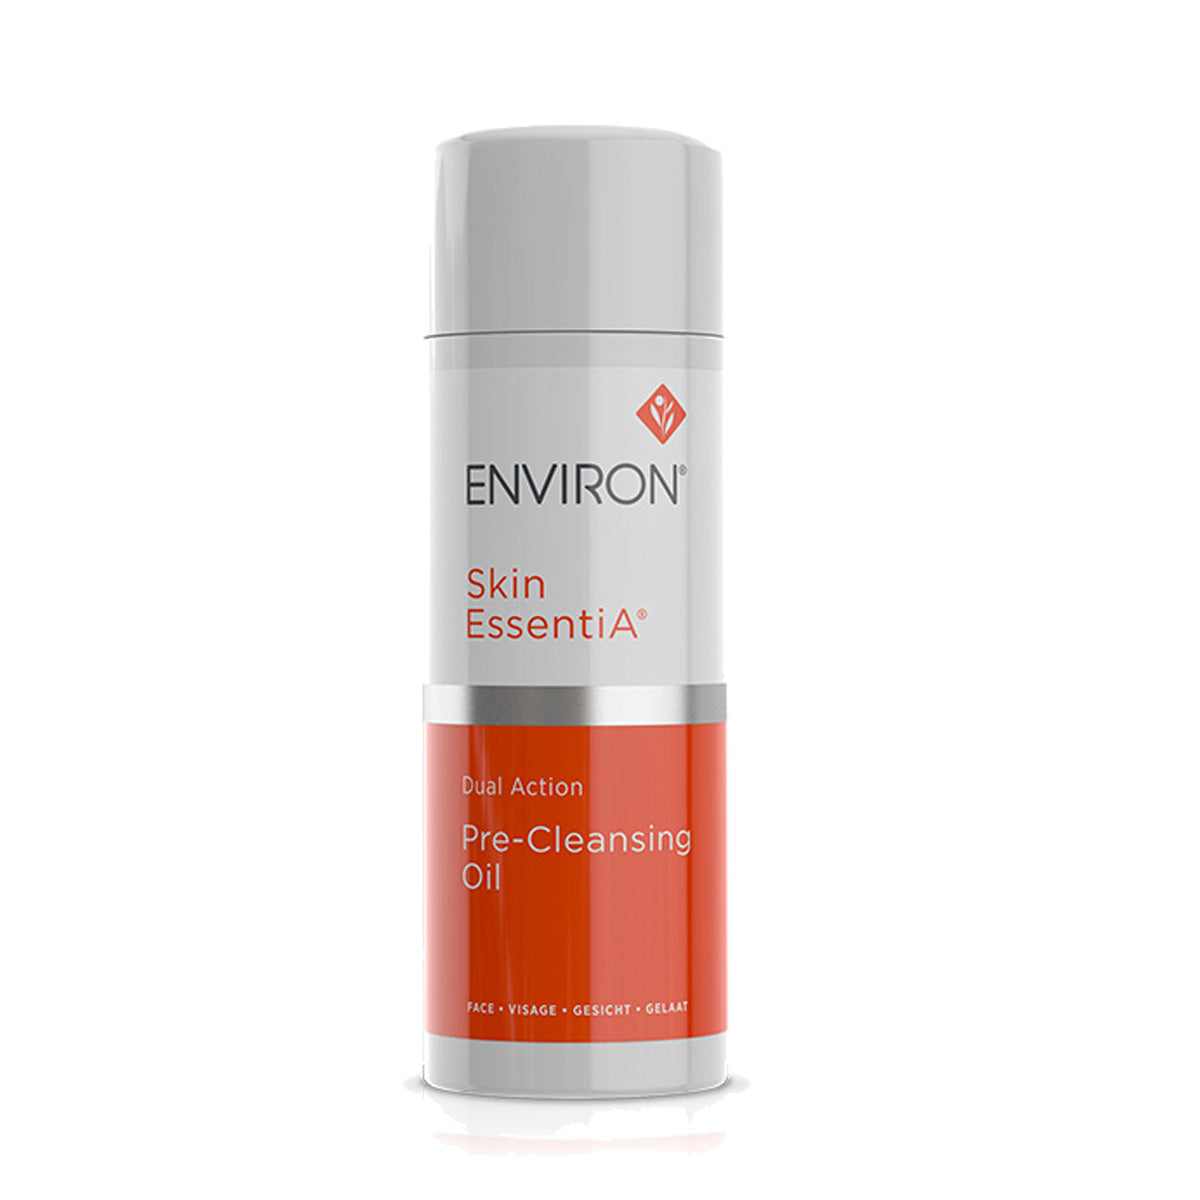 ENVIRON Skin EssentiA - Pre-Cleansing Oil